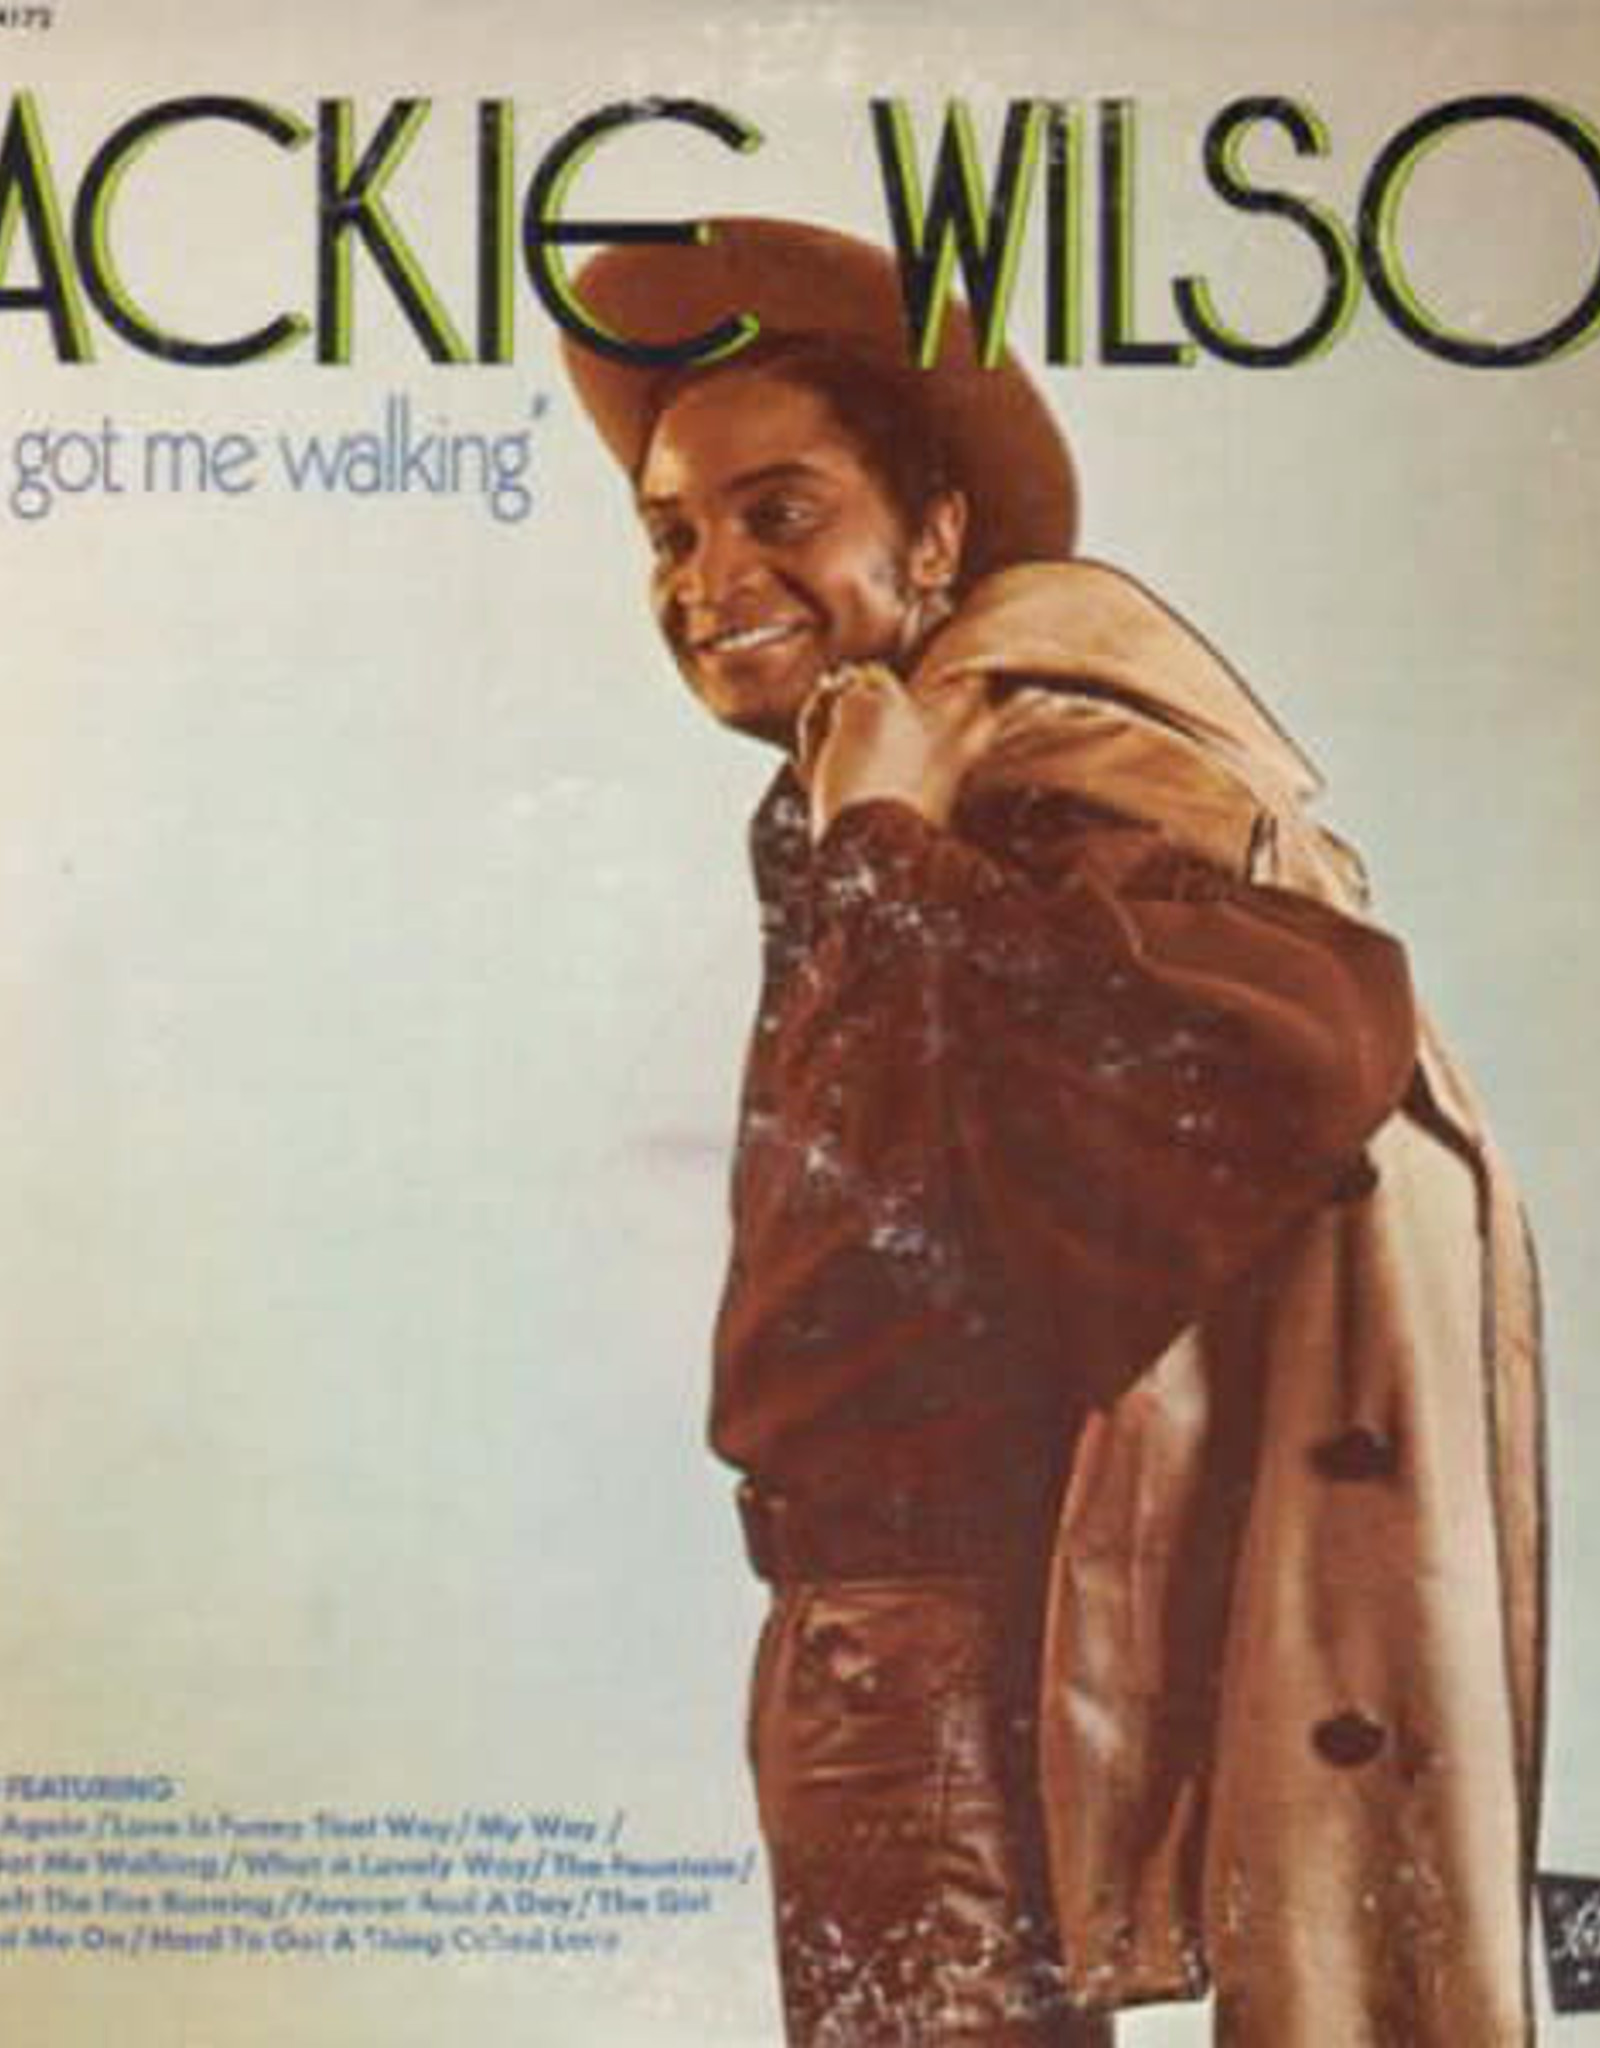 Jackie Wilson – You Got Me Walking